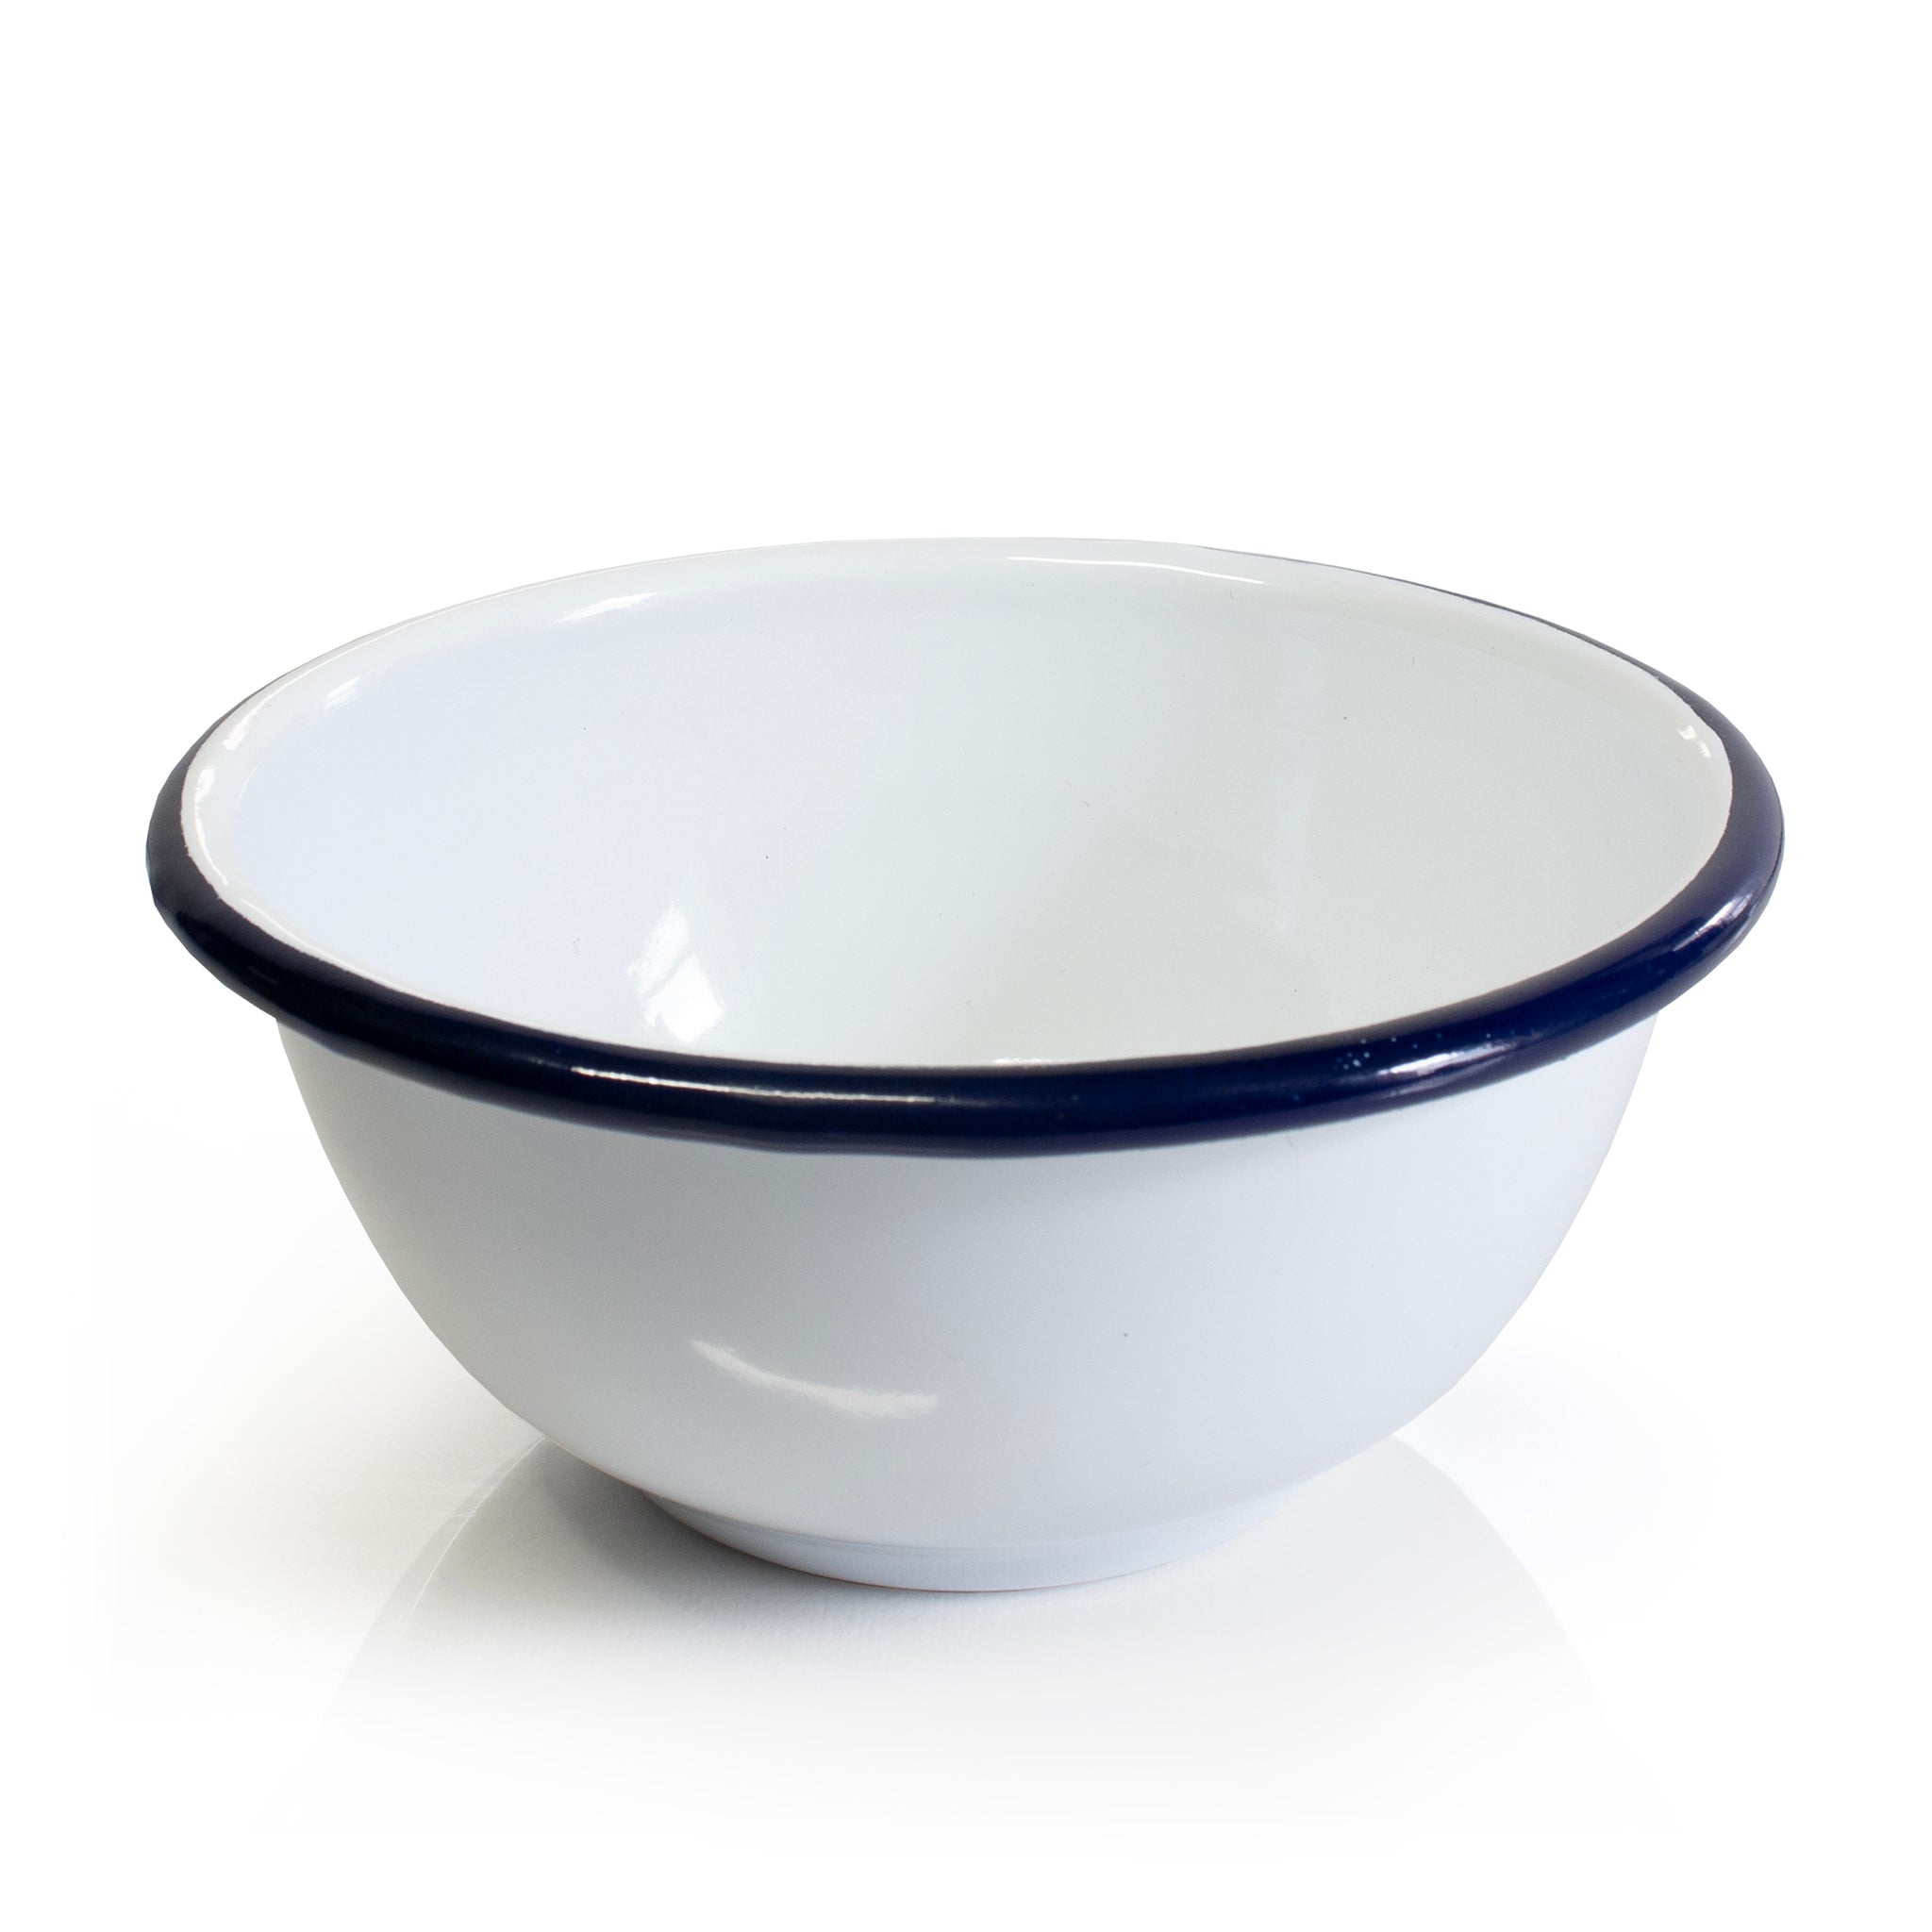 Enamel bowl white with blue rim